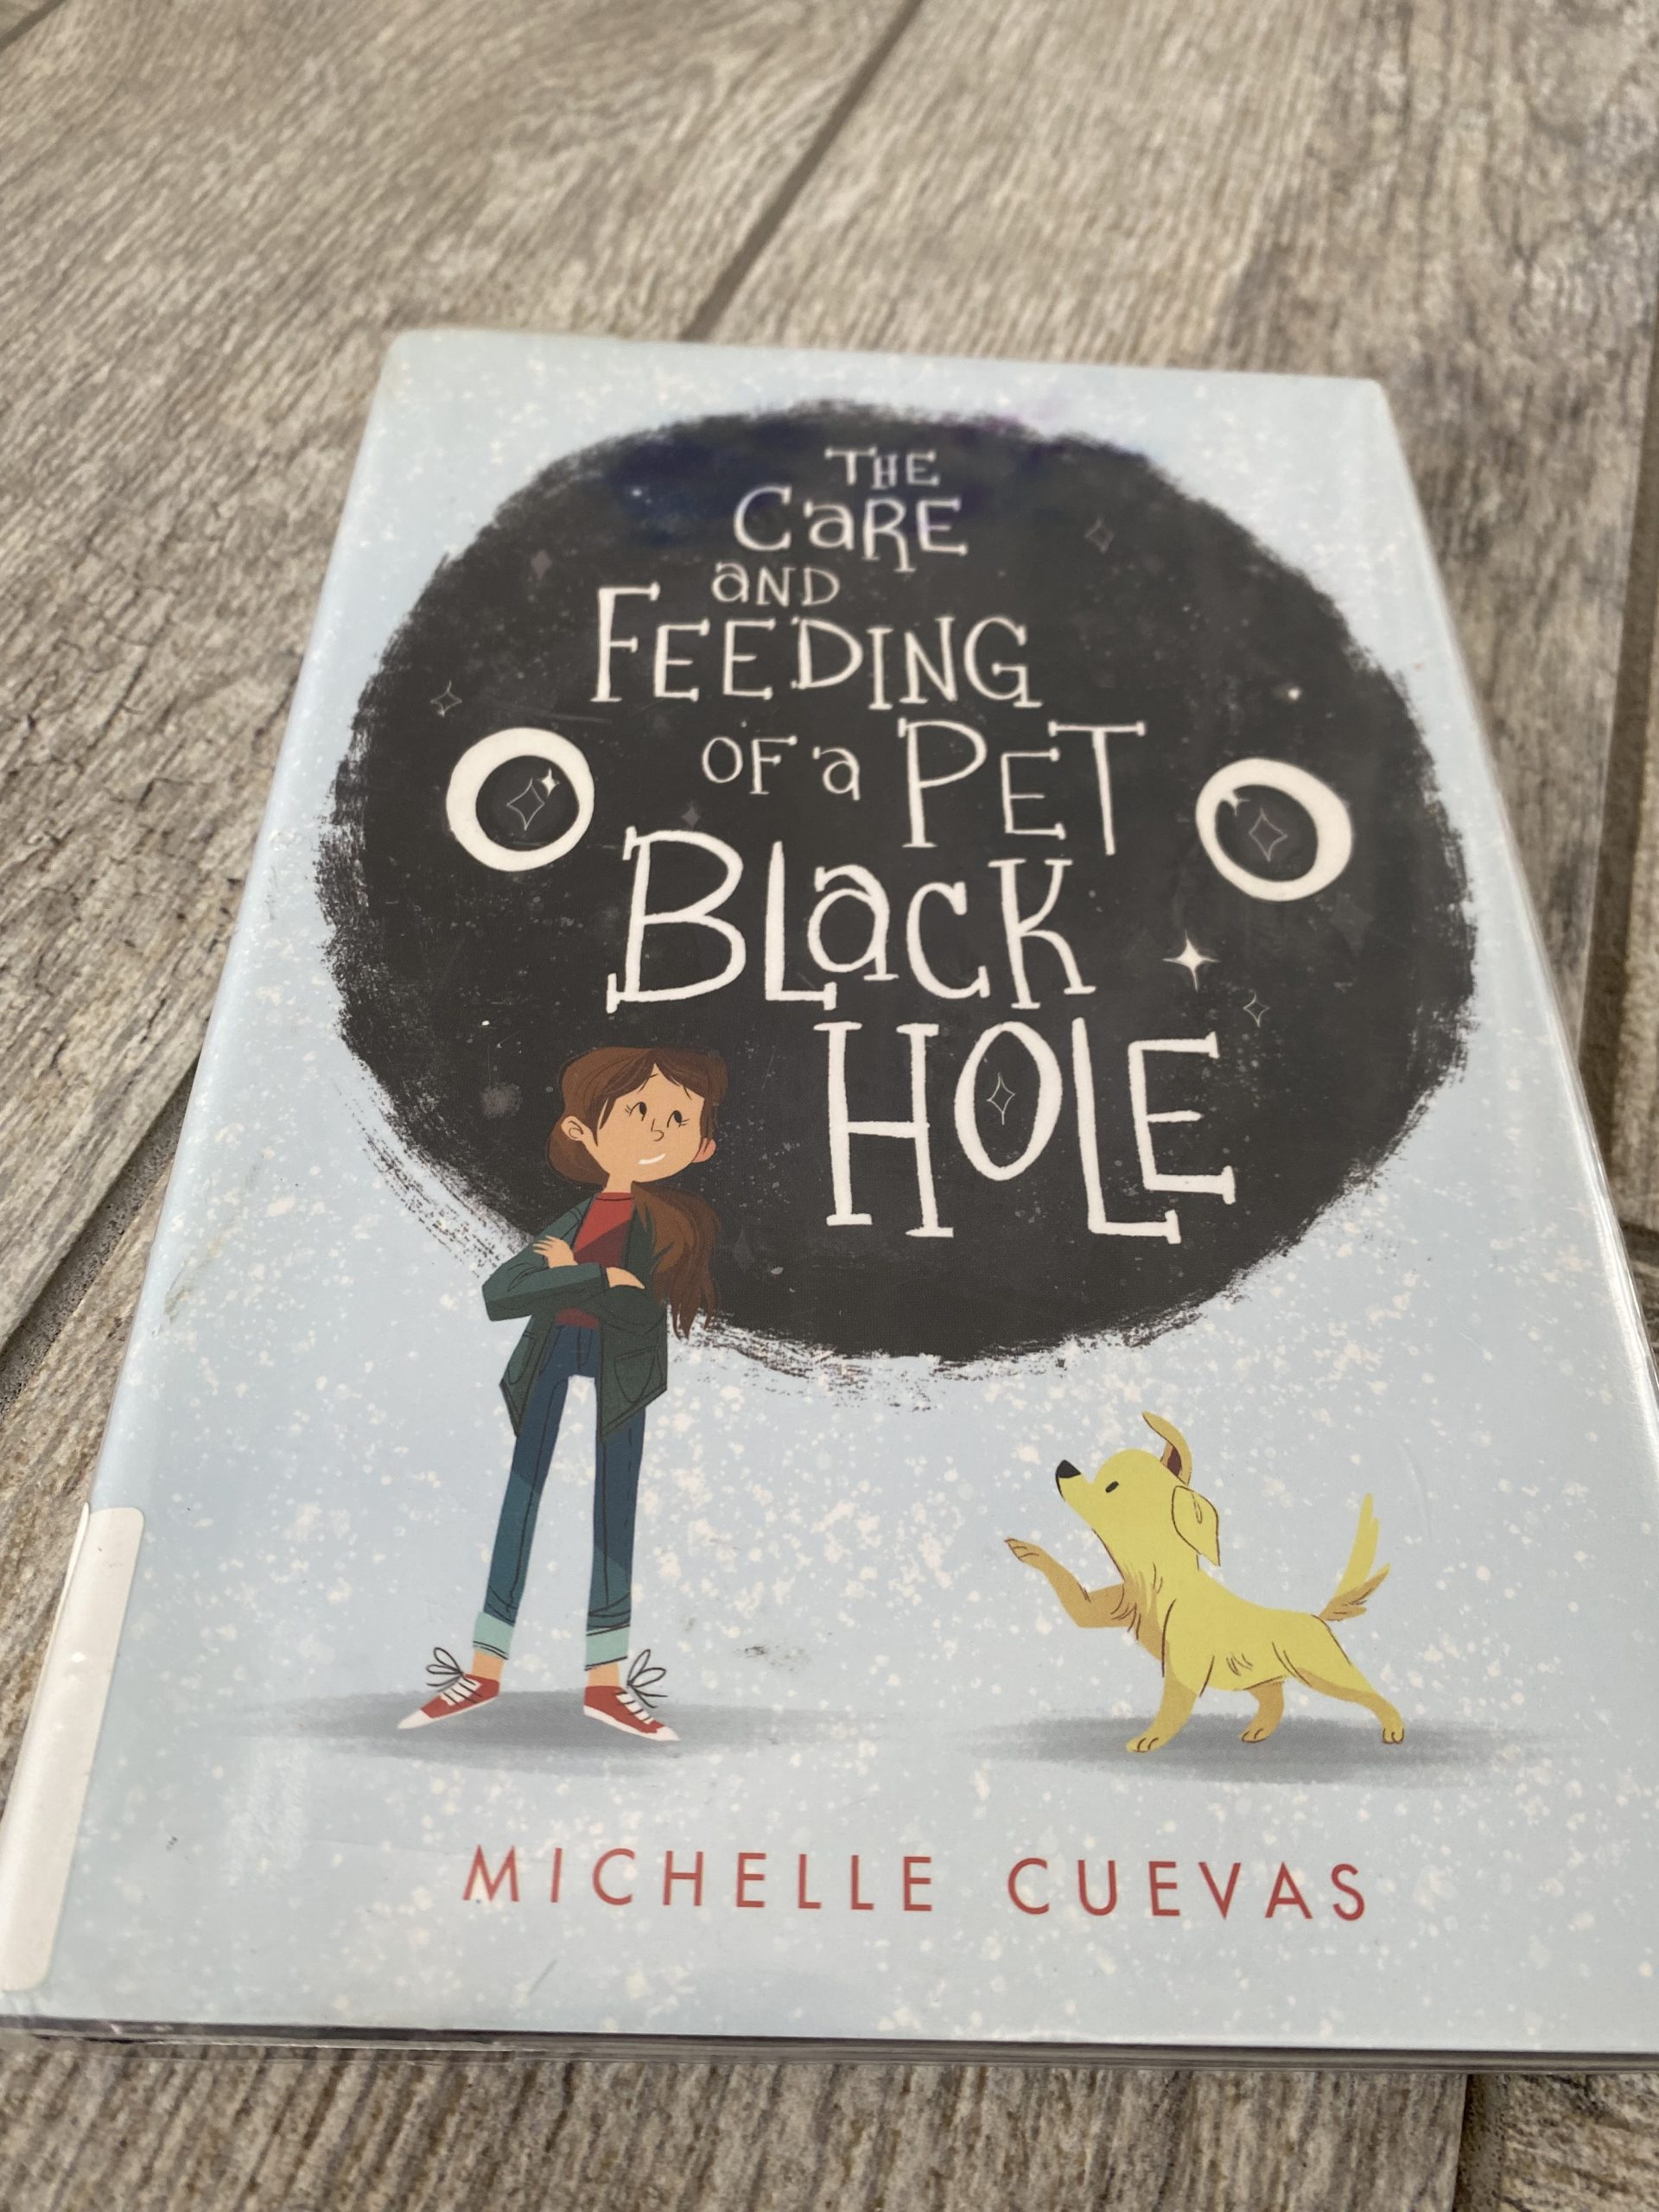 Bookshelf: “The Care and Feeding of a Pet Black Hole”